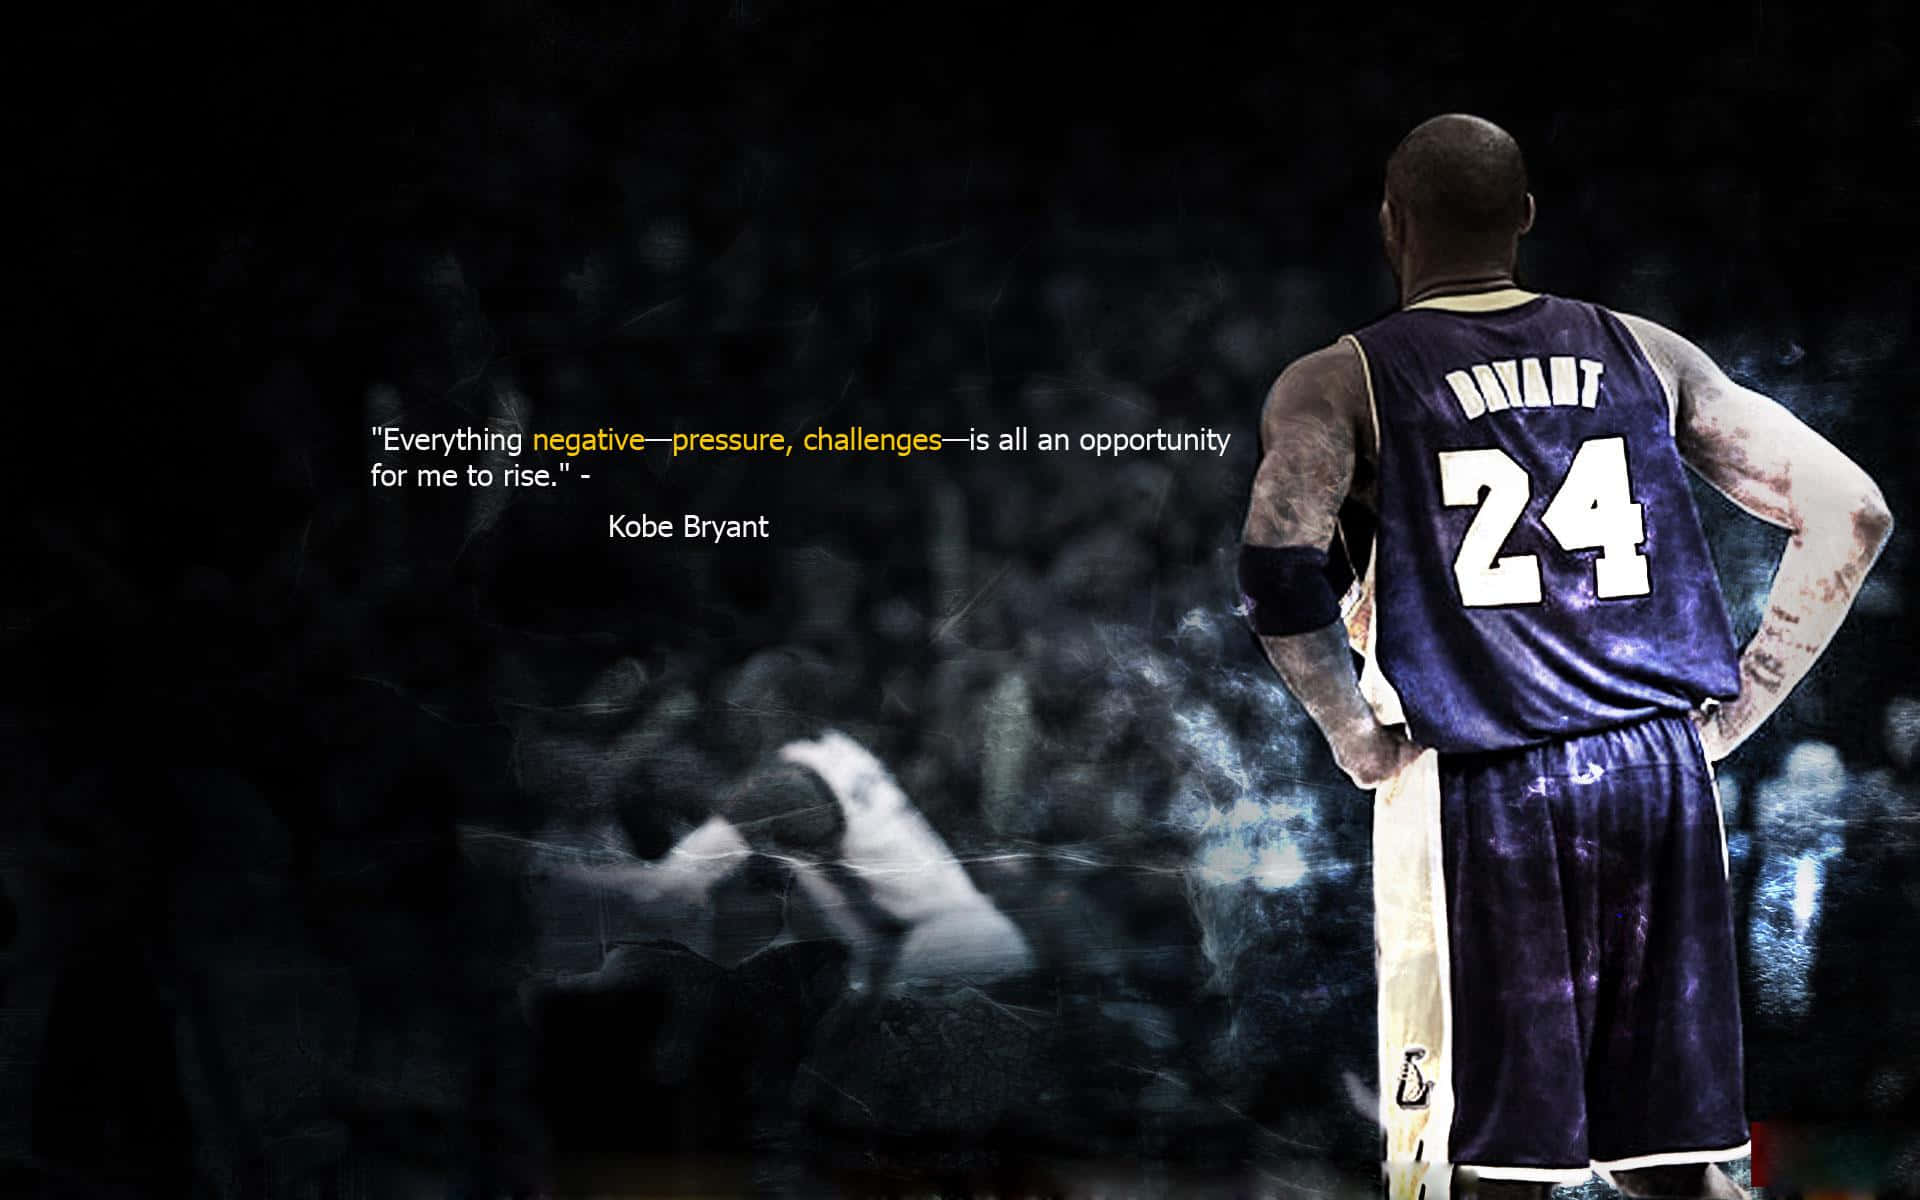 Kobe Bryant, the legendary basketball star